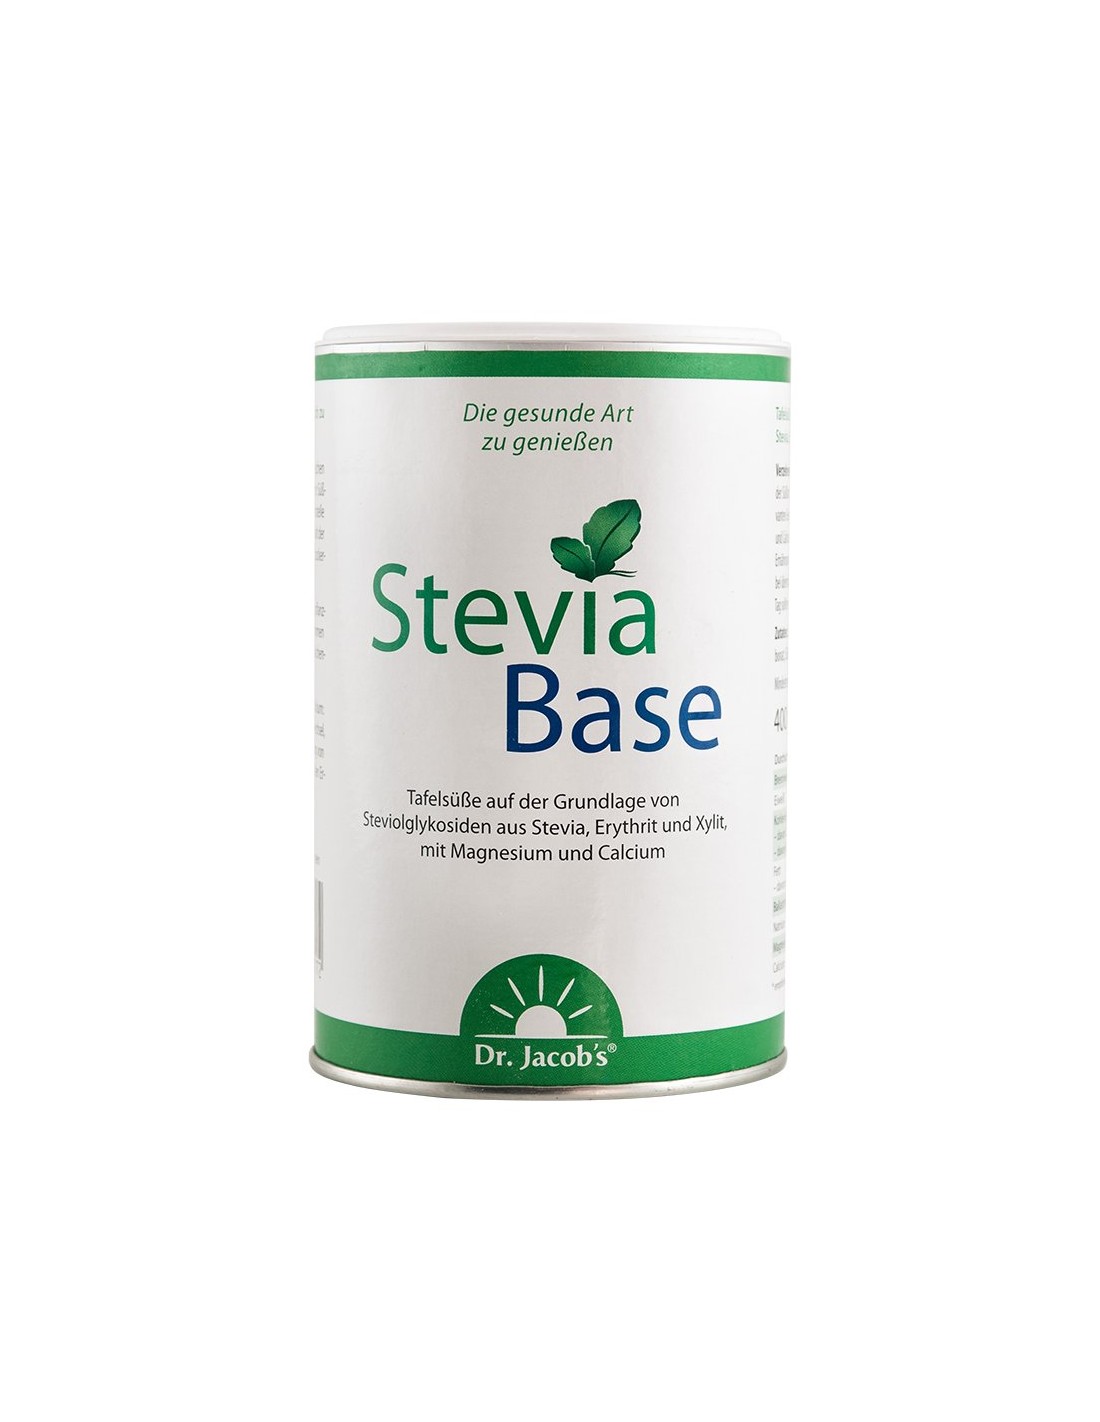 Stevia base, dolcificante naturale gusto neutro - Gr 400